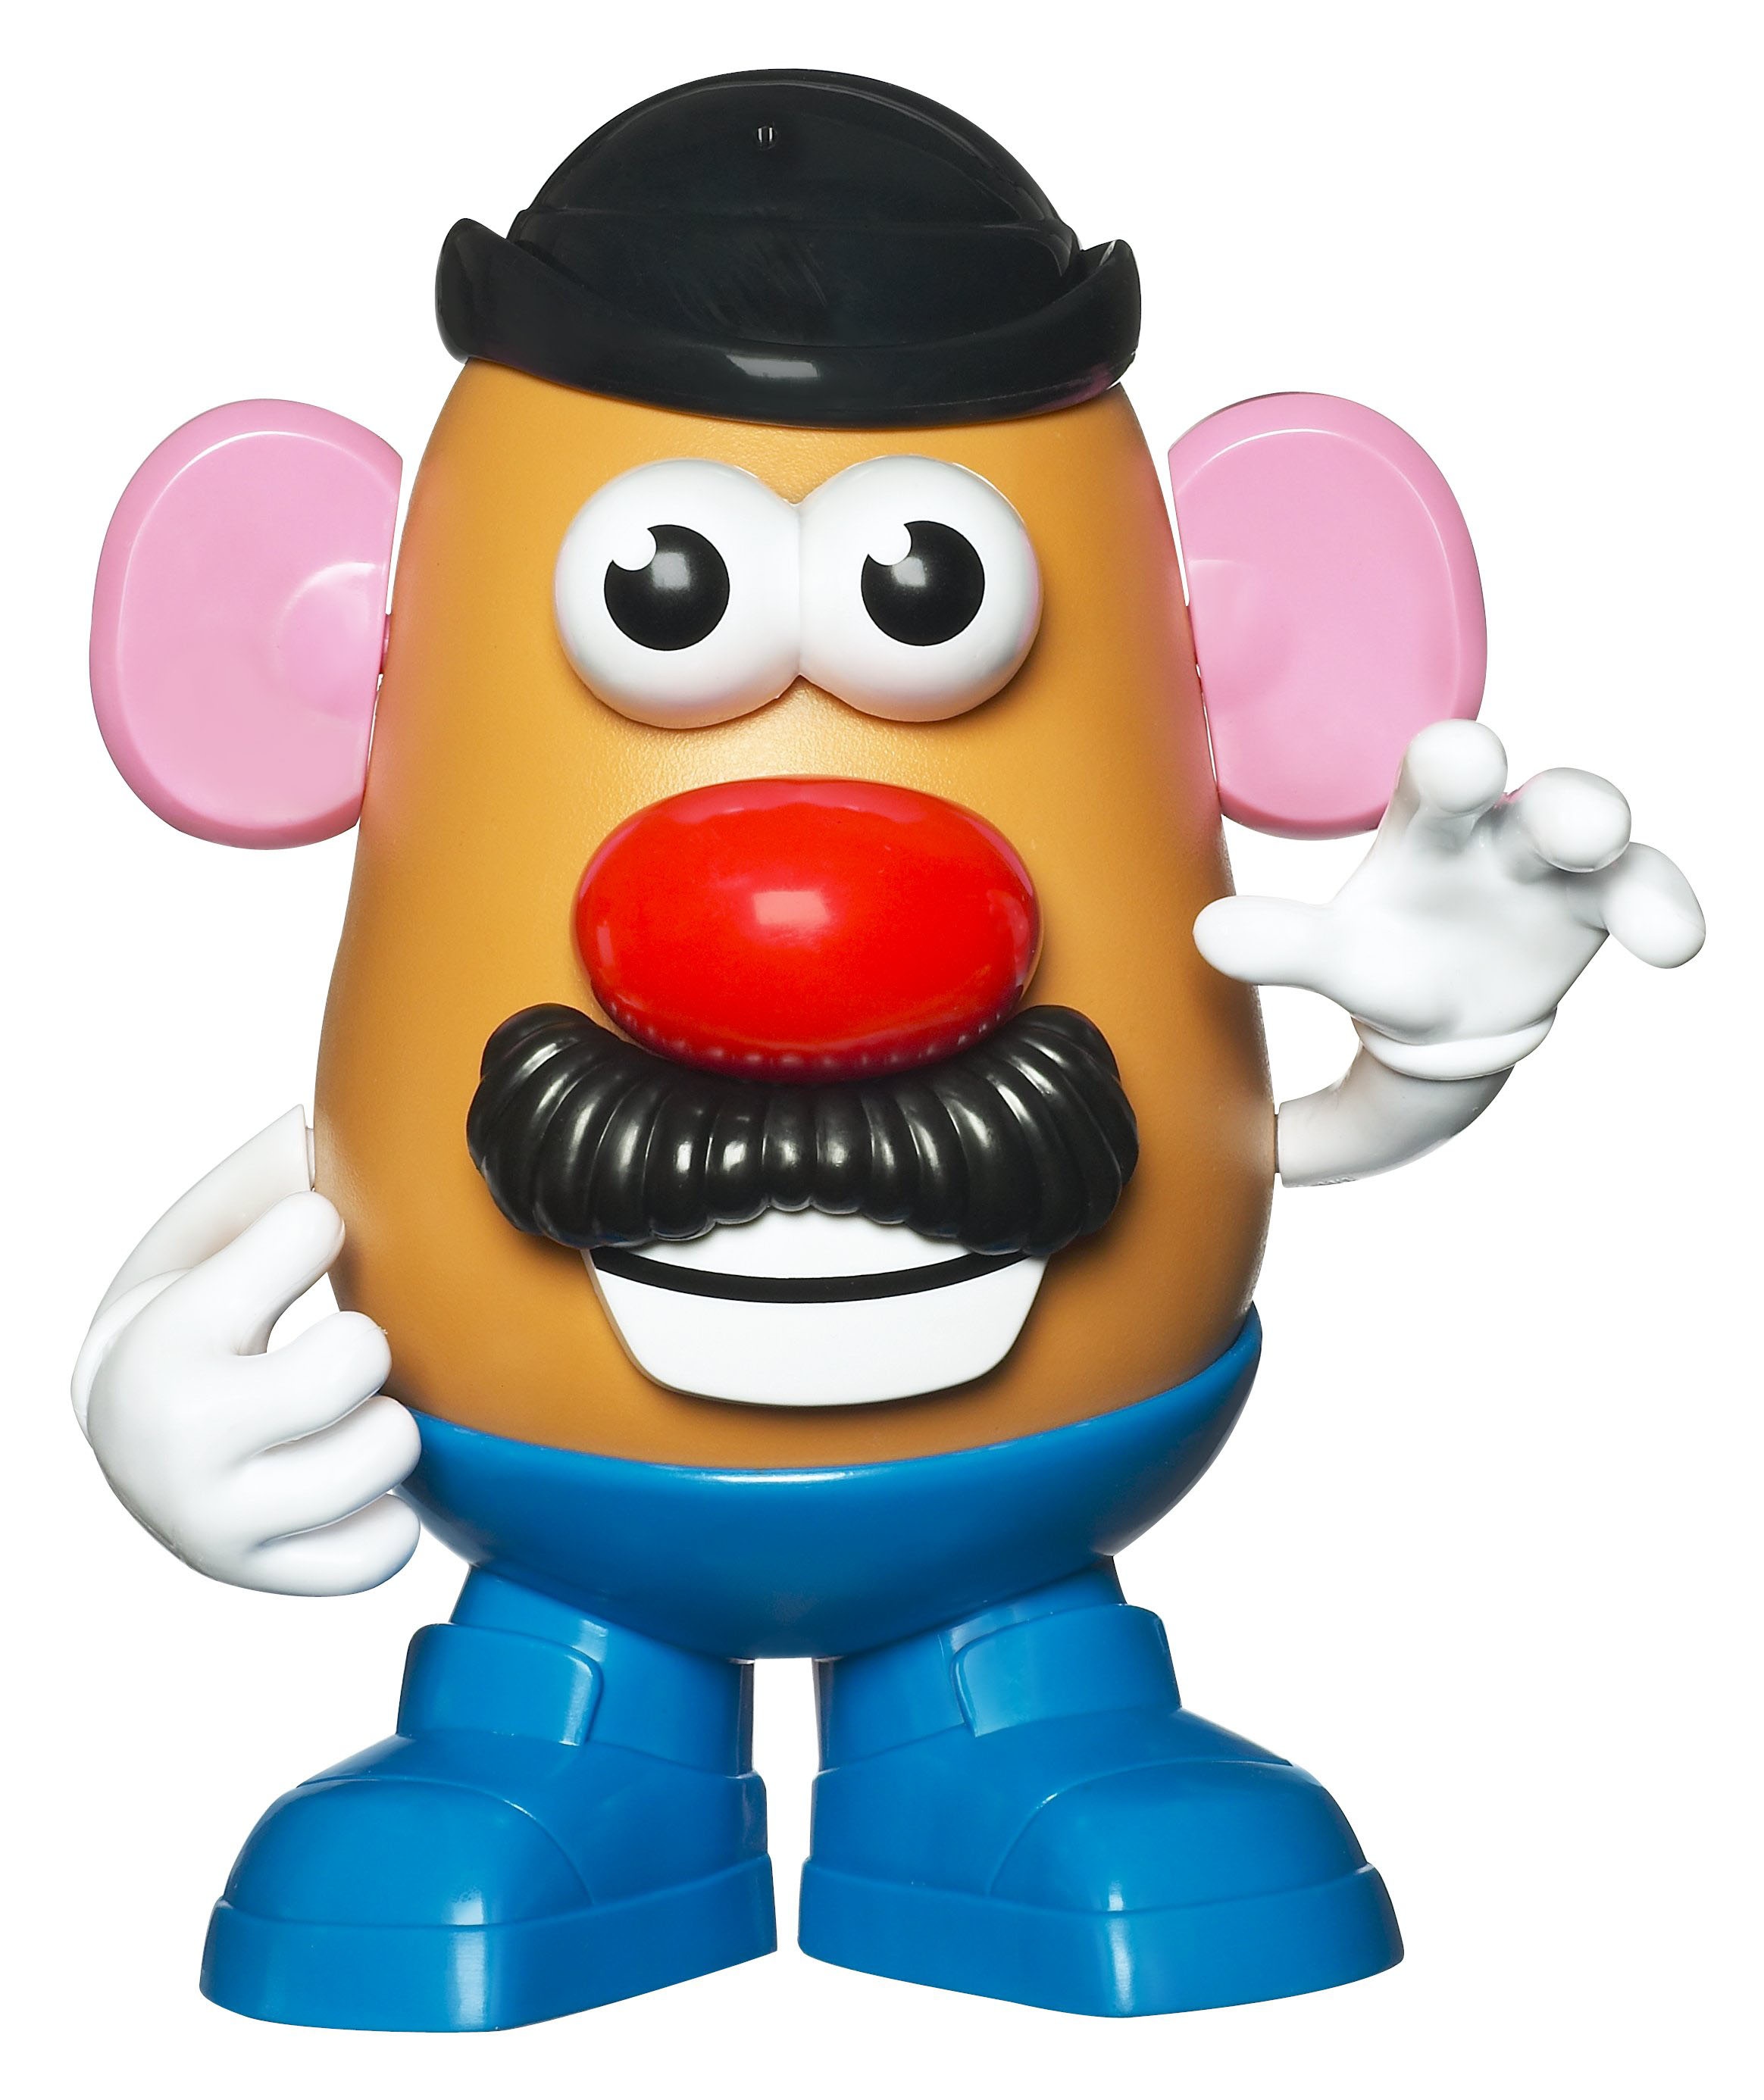 Hasbro Unveils a Thinner 'Active Adventures' line of Mr. Potato Head